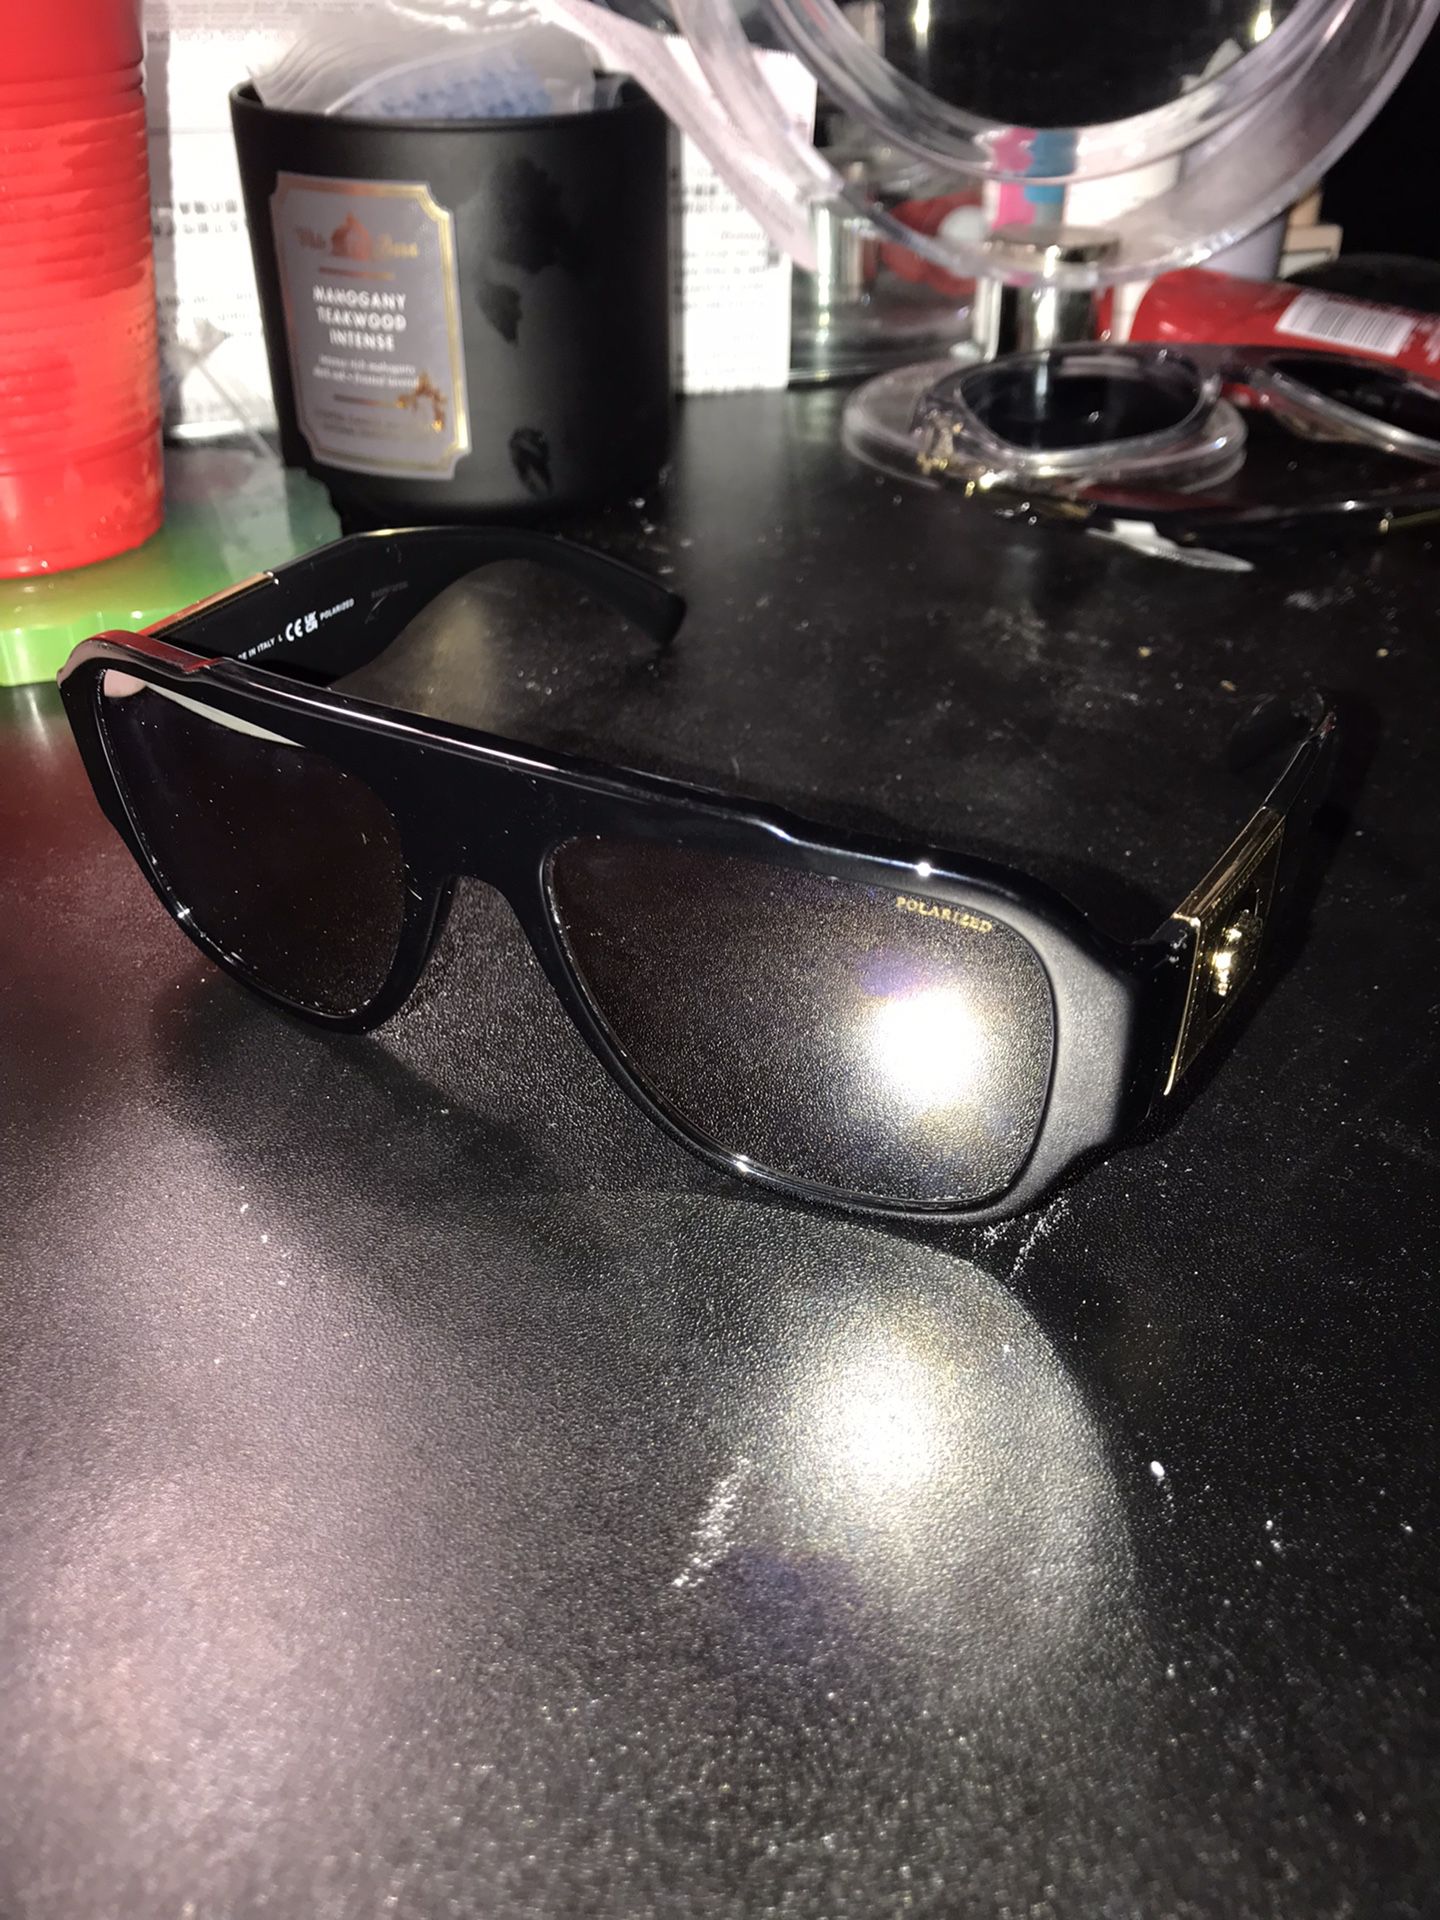 Versace Polarized Sunglasses